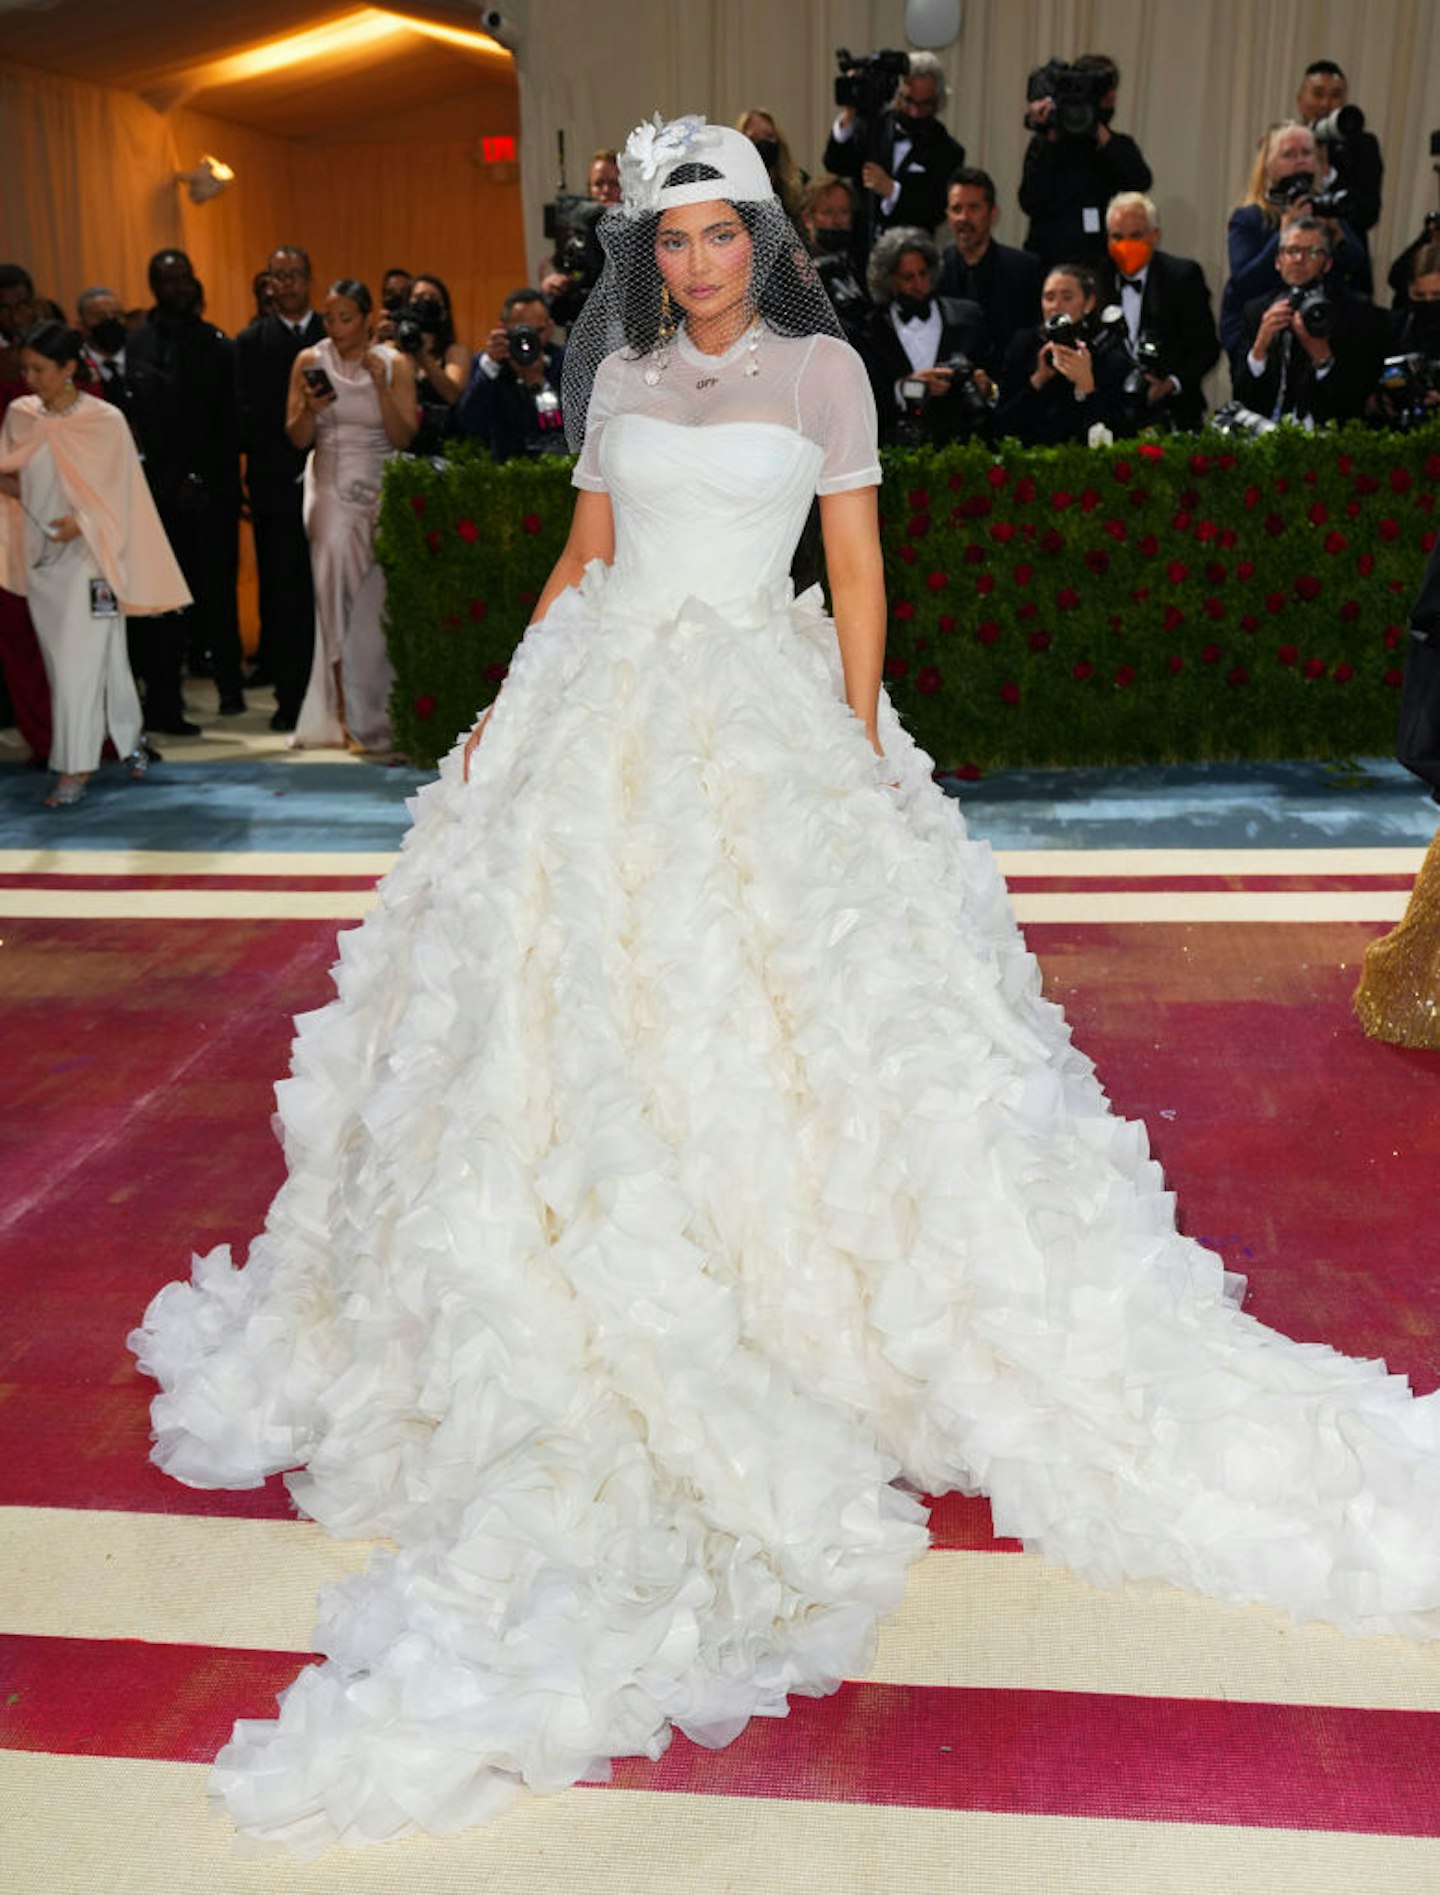 Kylie Jenner Off-White dress